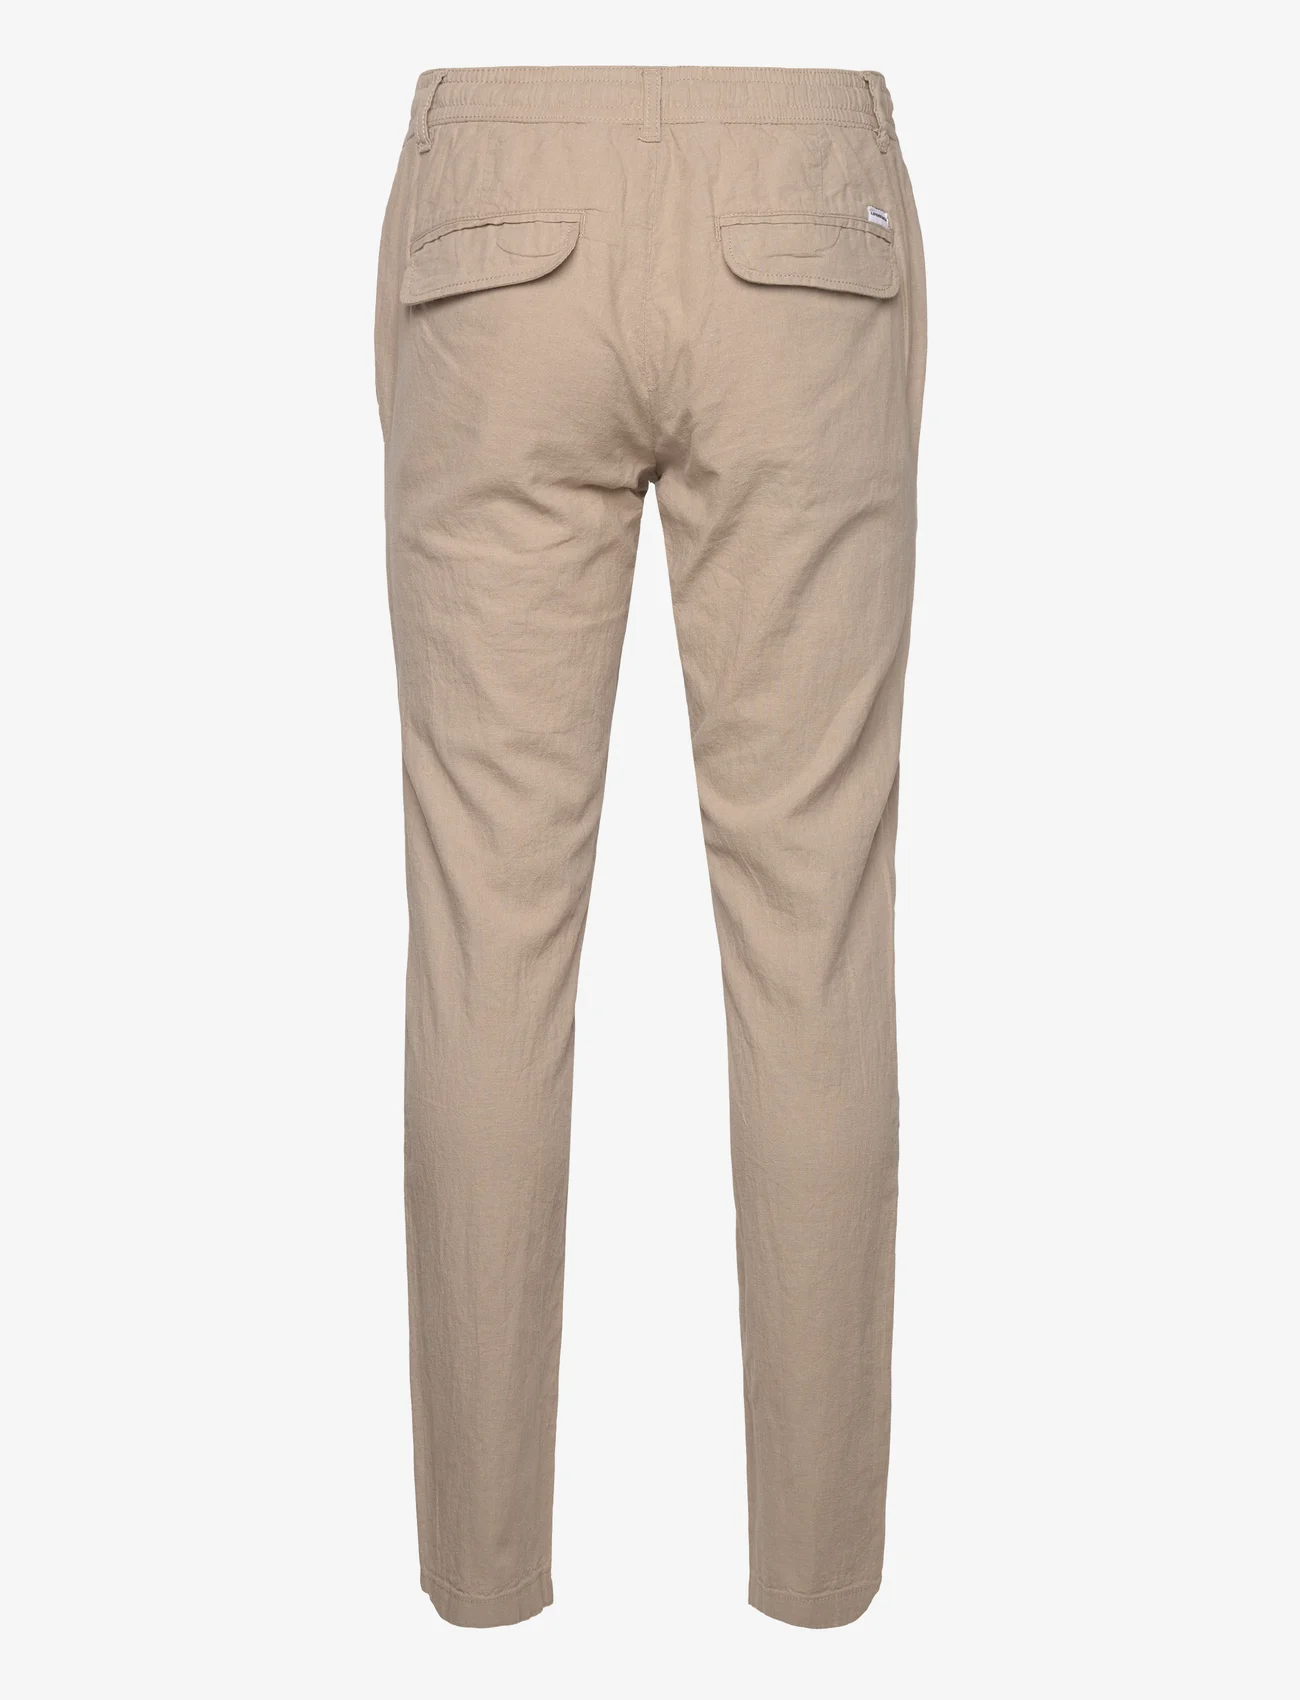 Lindbergh - Linen pants - linen trousers - sand - 1